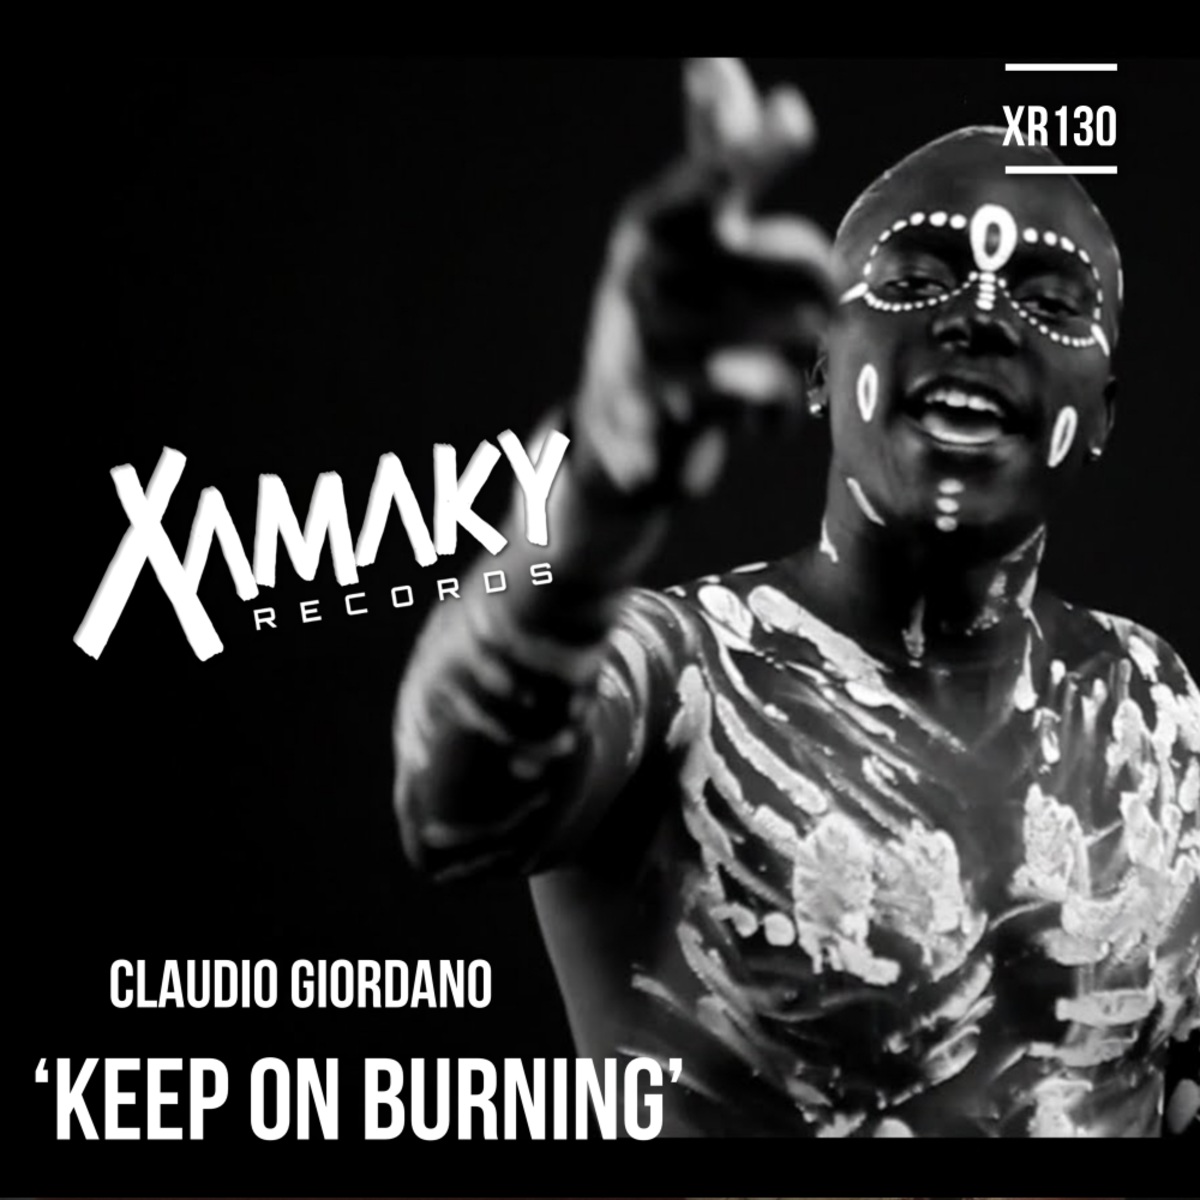 Claudio Giordano - Keep On Burning / Xamaky Records